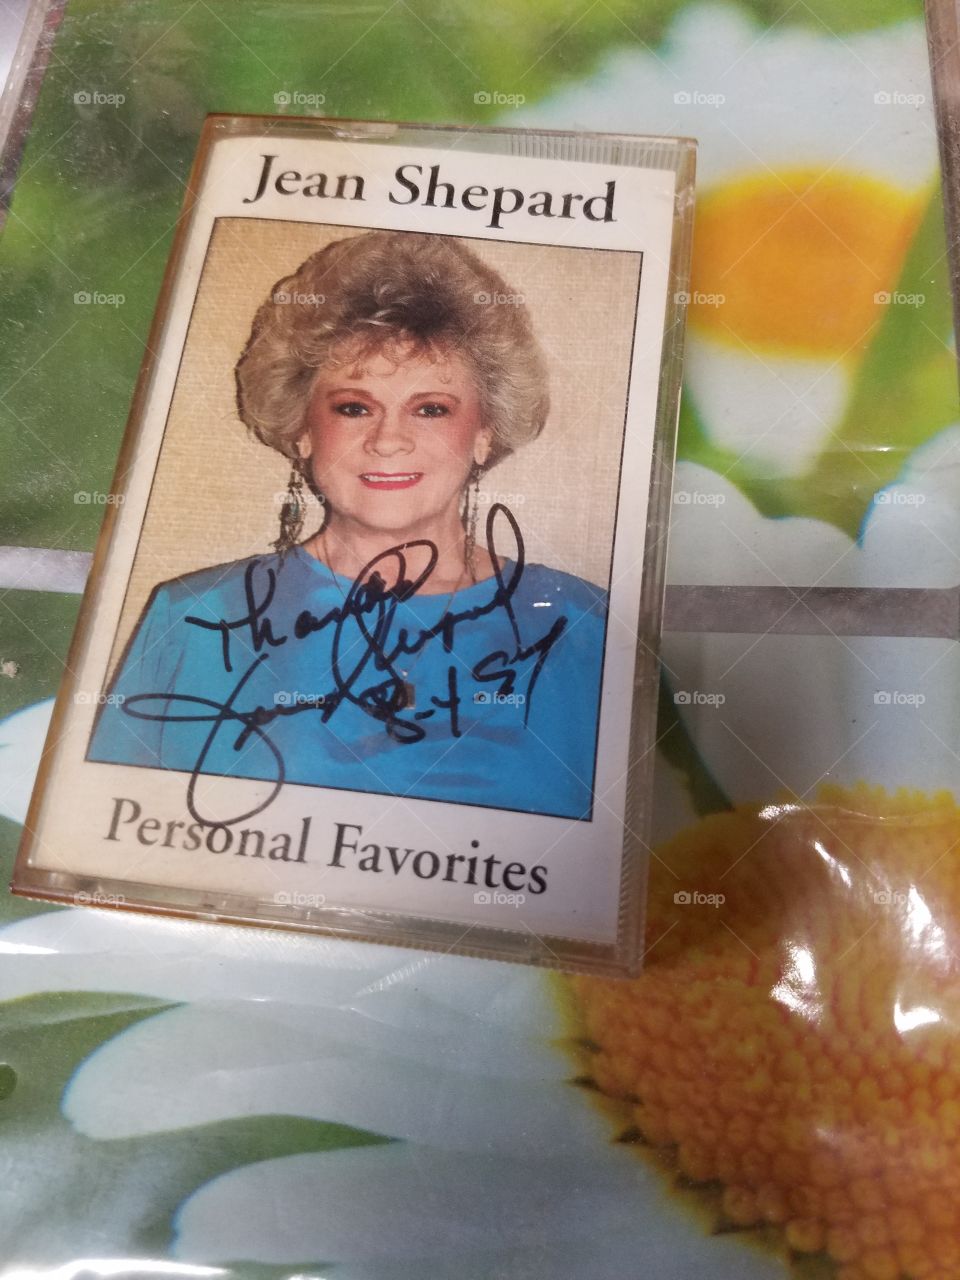 Jean Shepherd cassette 1997  just passed away